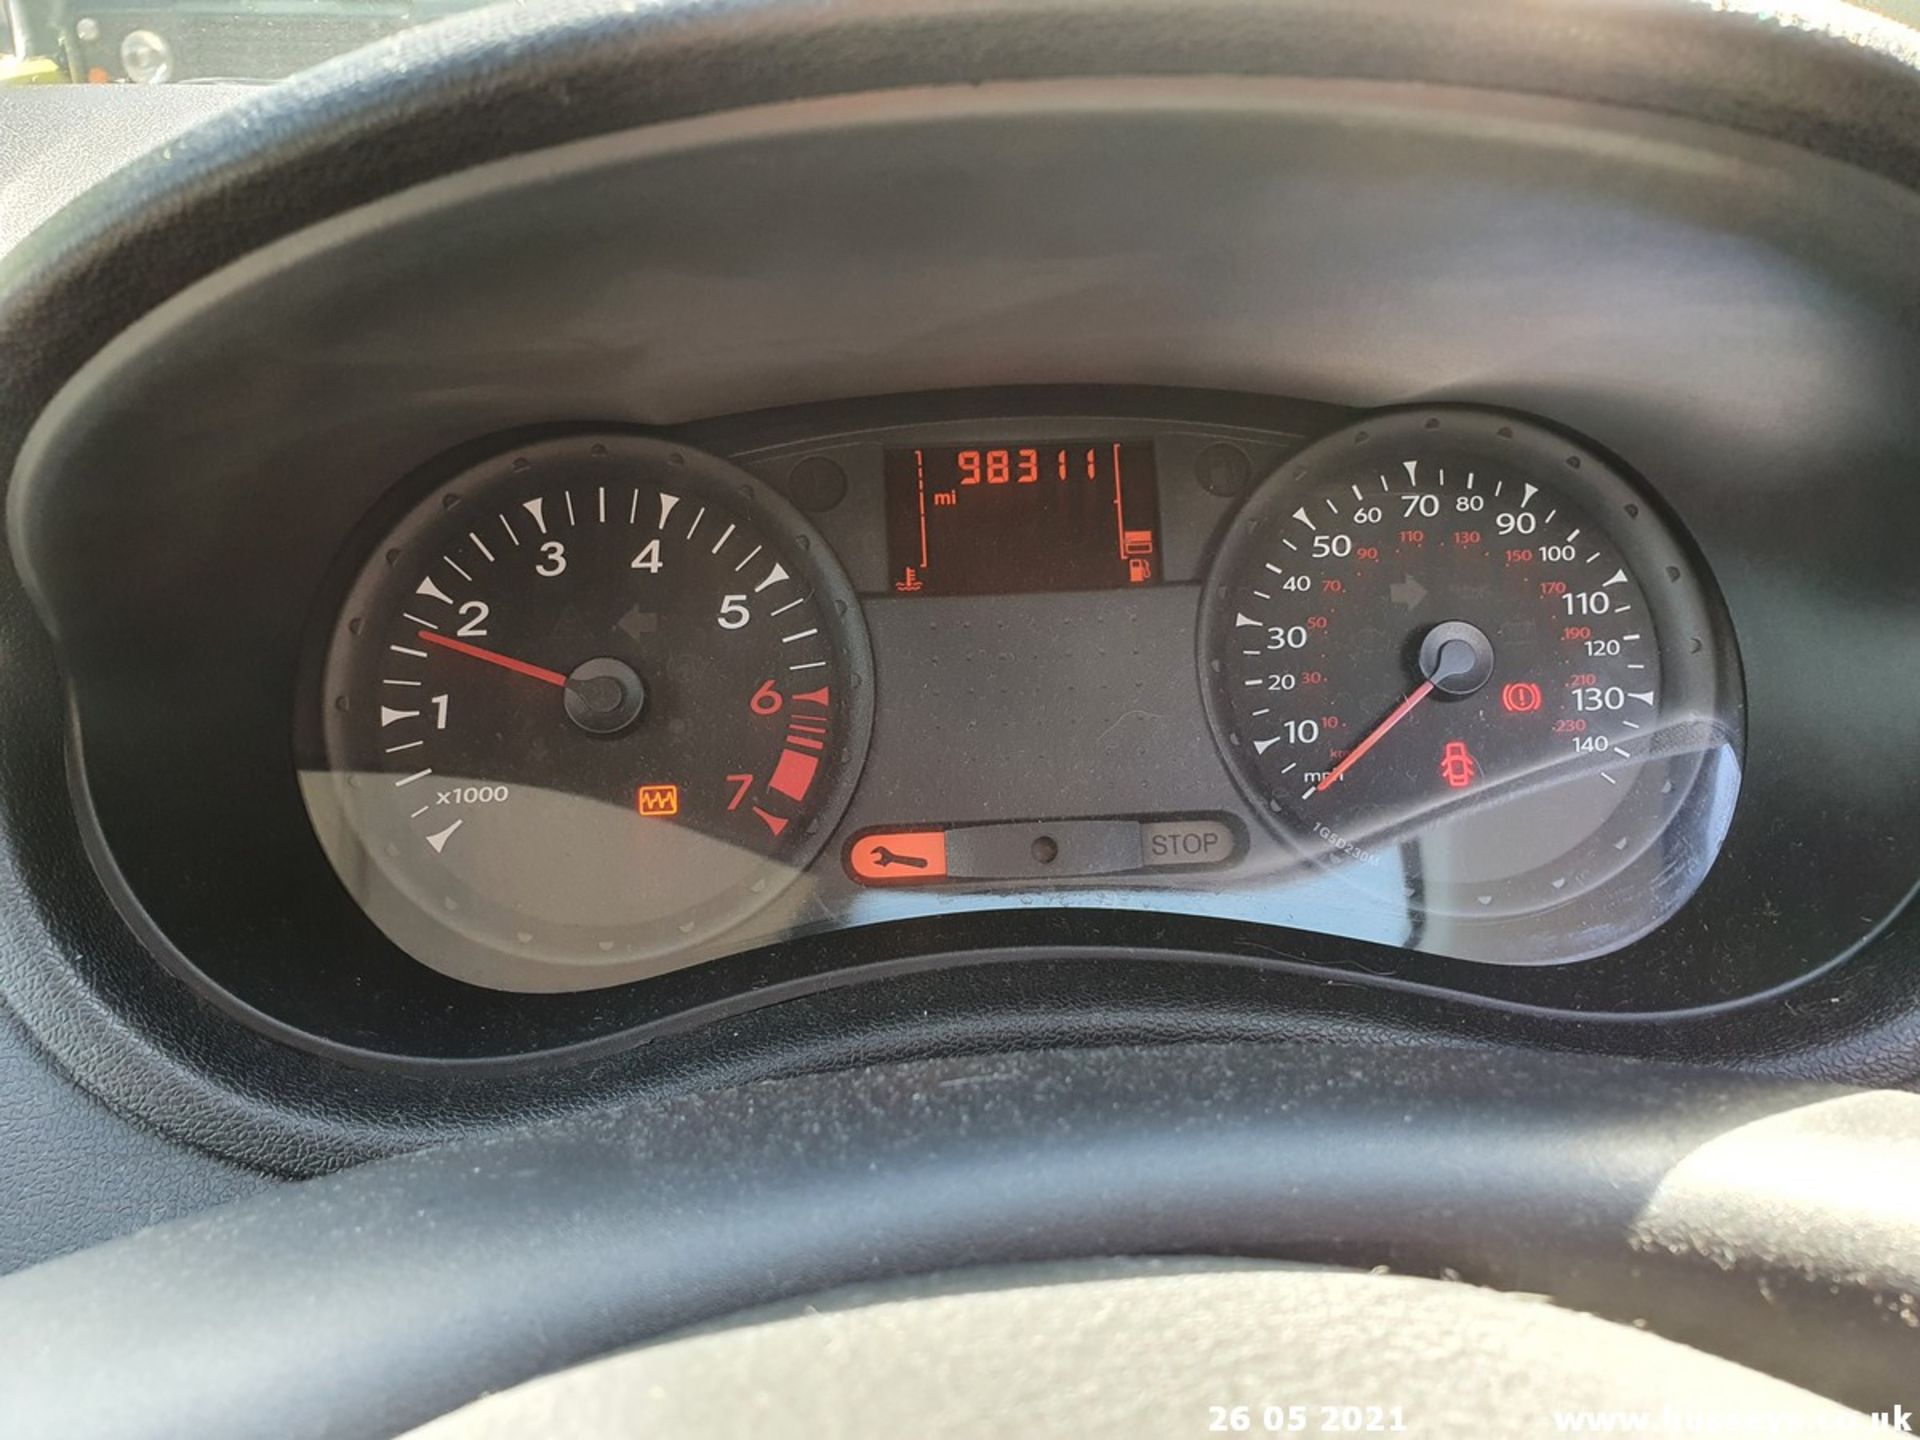 09/59 RENAULT CLIO EXTREME - 1149cc 3dr Hatchback (Green, 98k) - Image 19 of 19